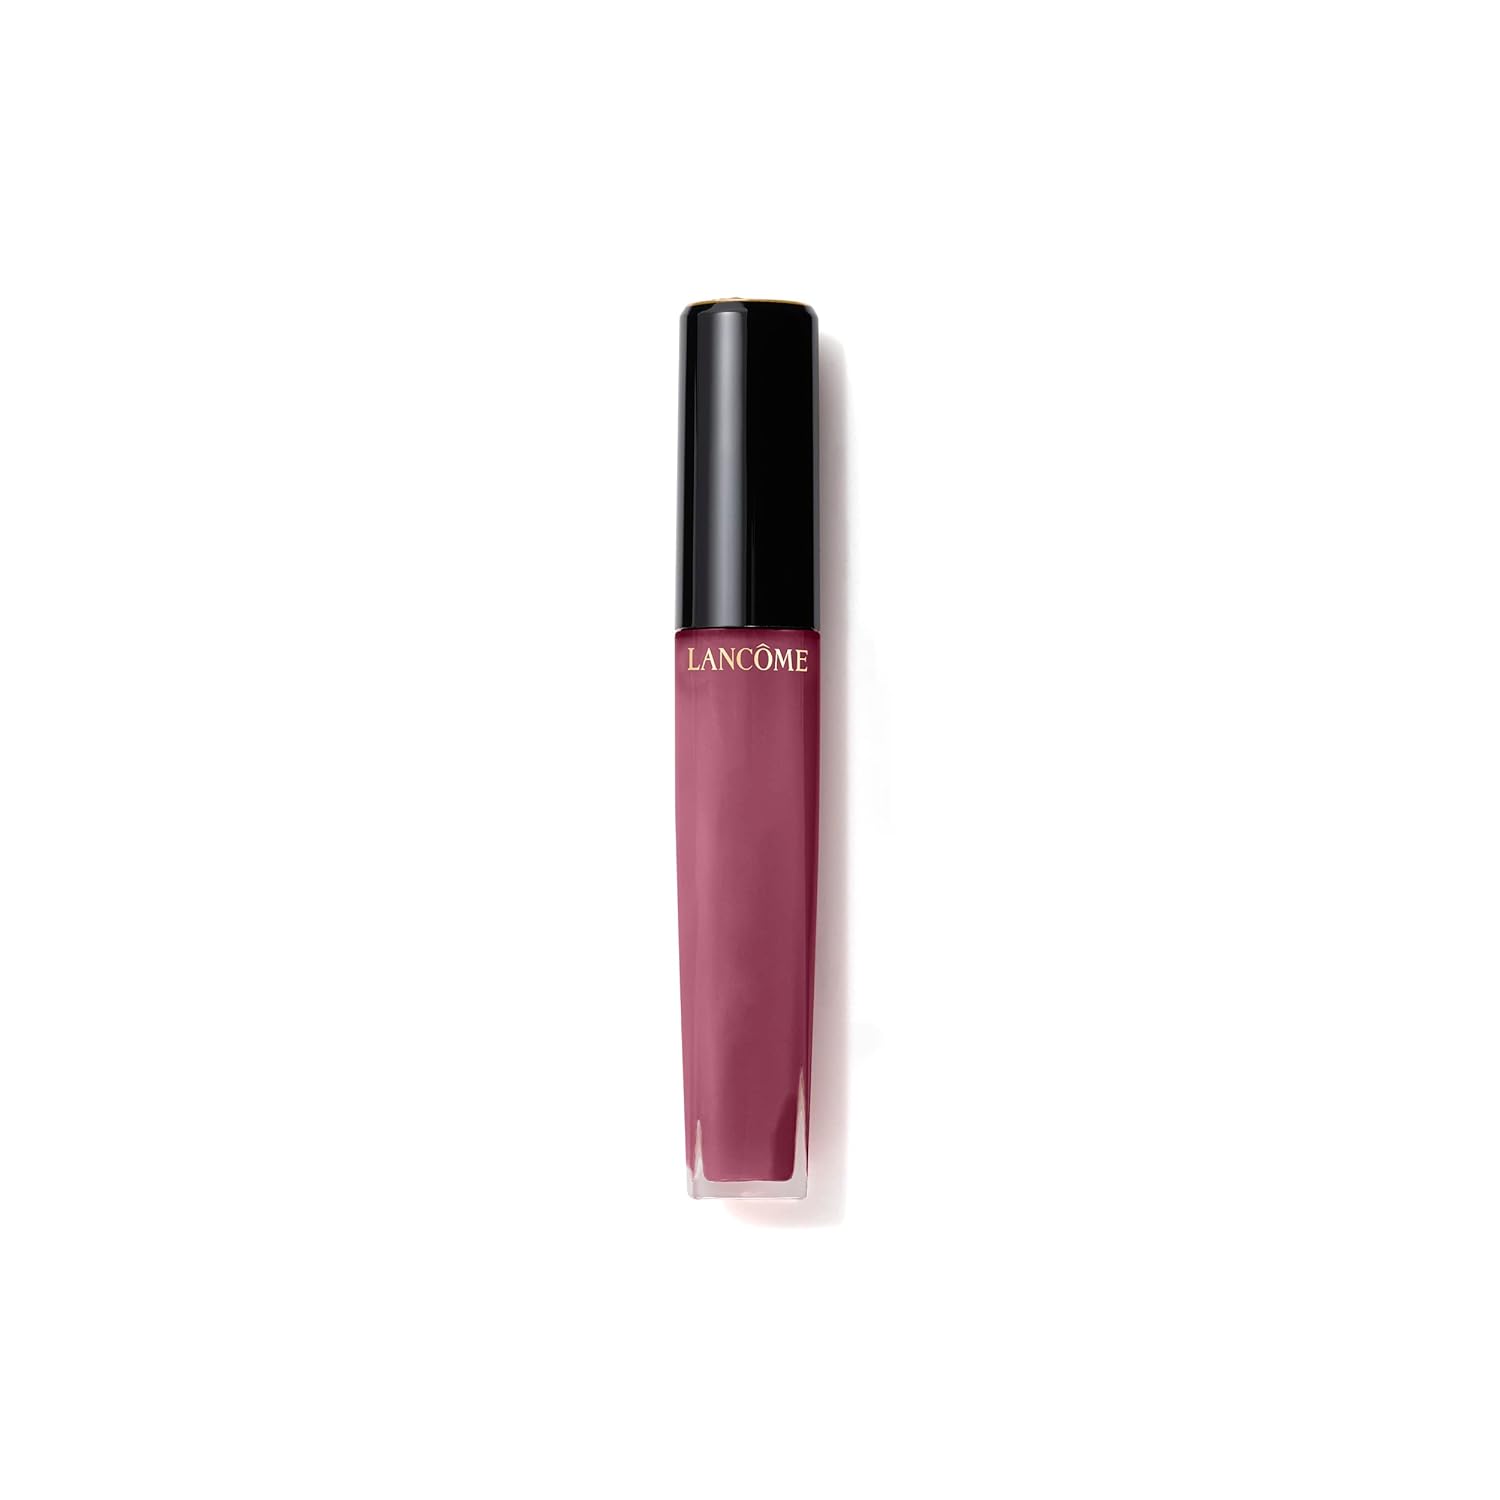 Lanco?me L'Absolu Lip Gloss - Creamy & Non-Sticky Hydrating Plumping Cream